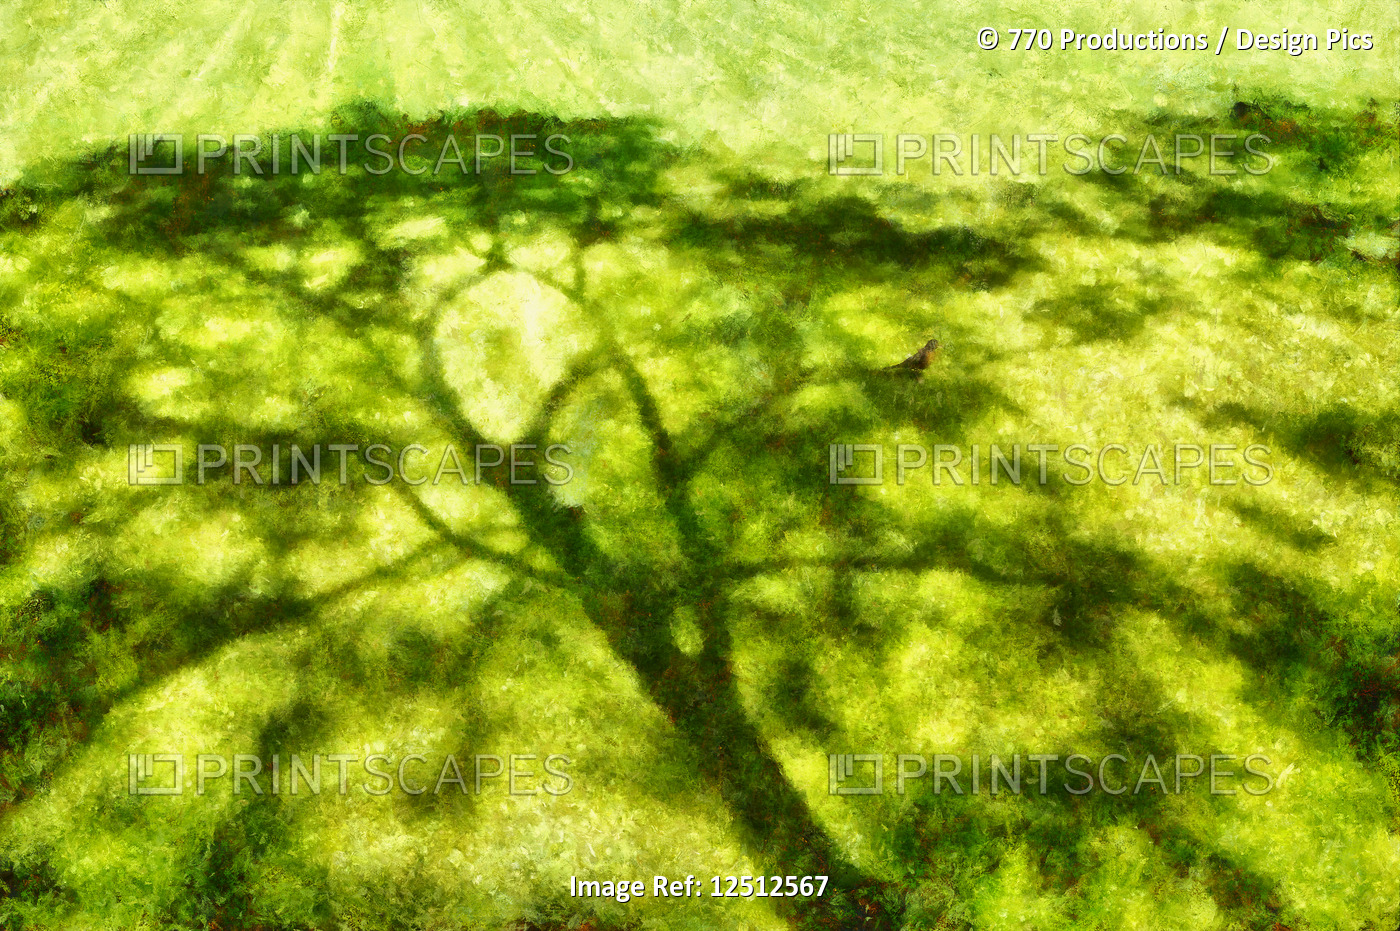 Digital painting of tree shadows on lush, green grass